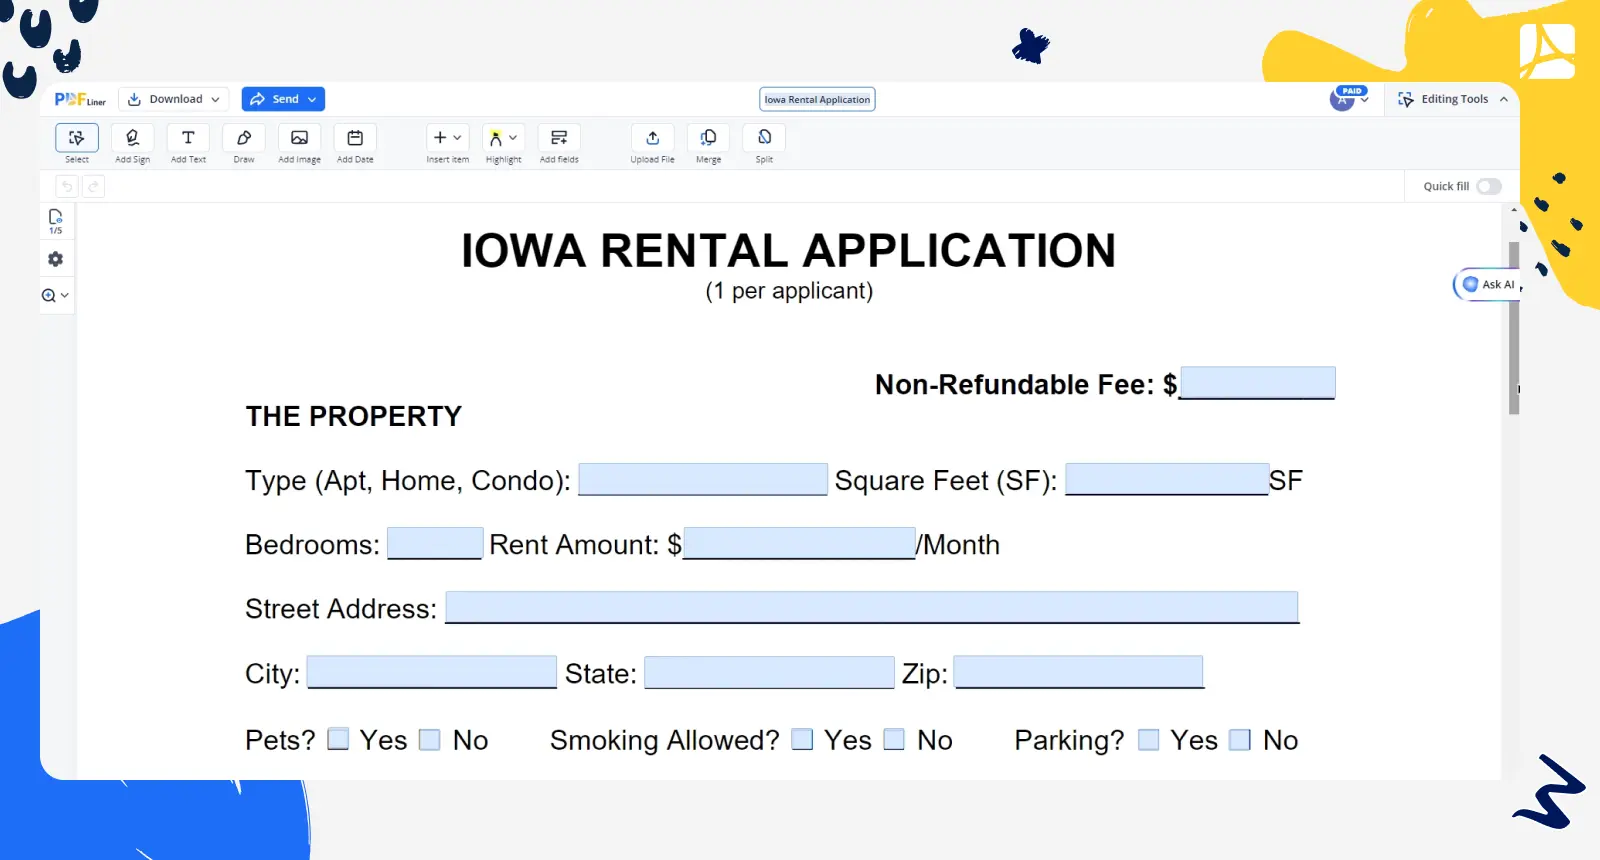 Iowa Rental Application PDFLiner screenshot